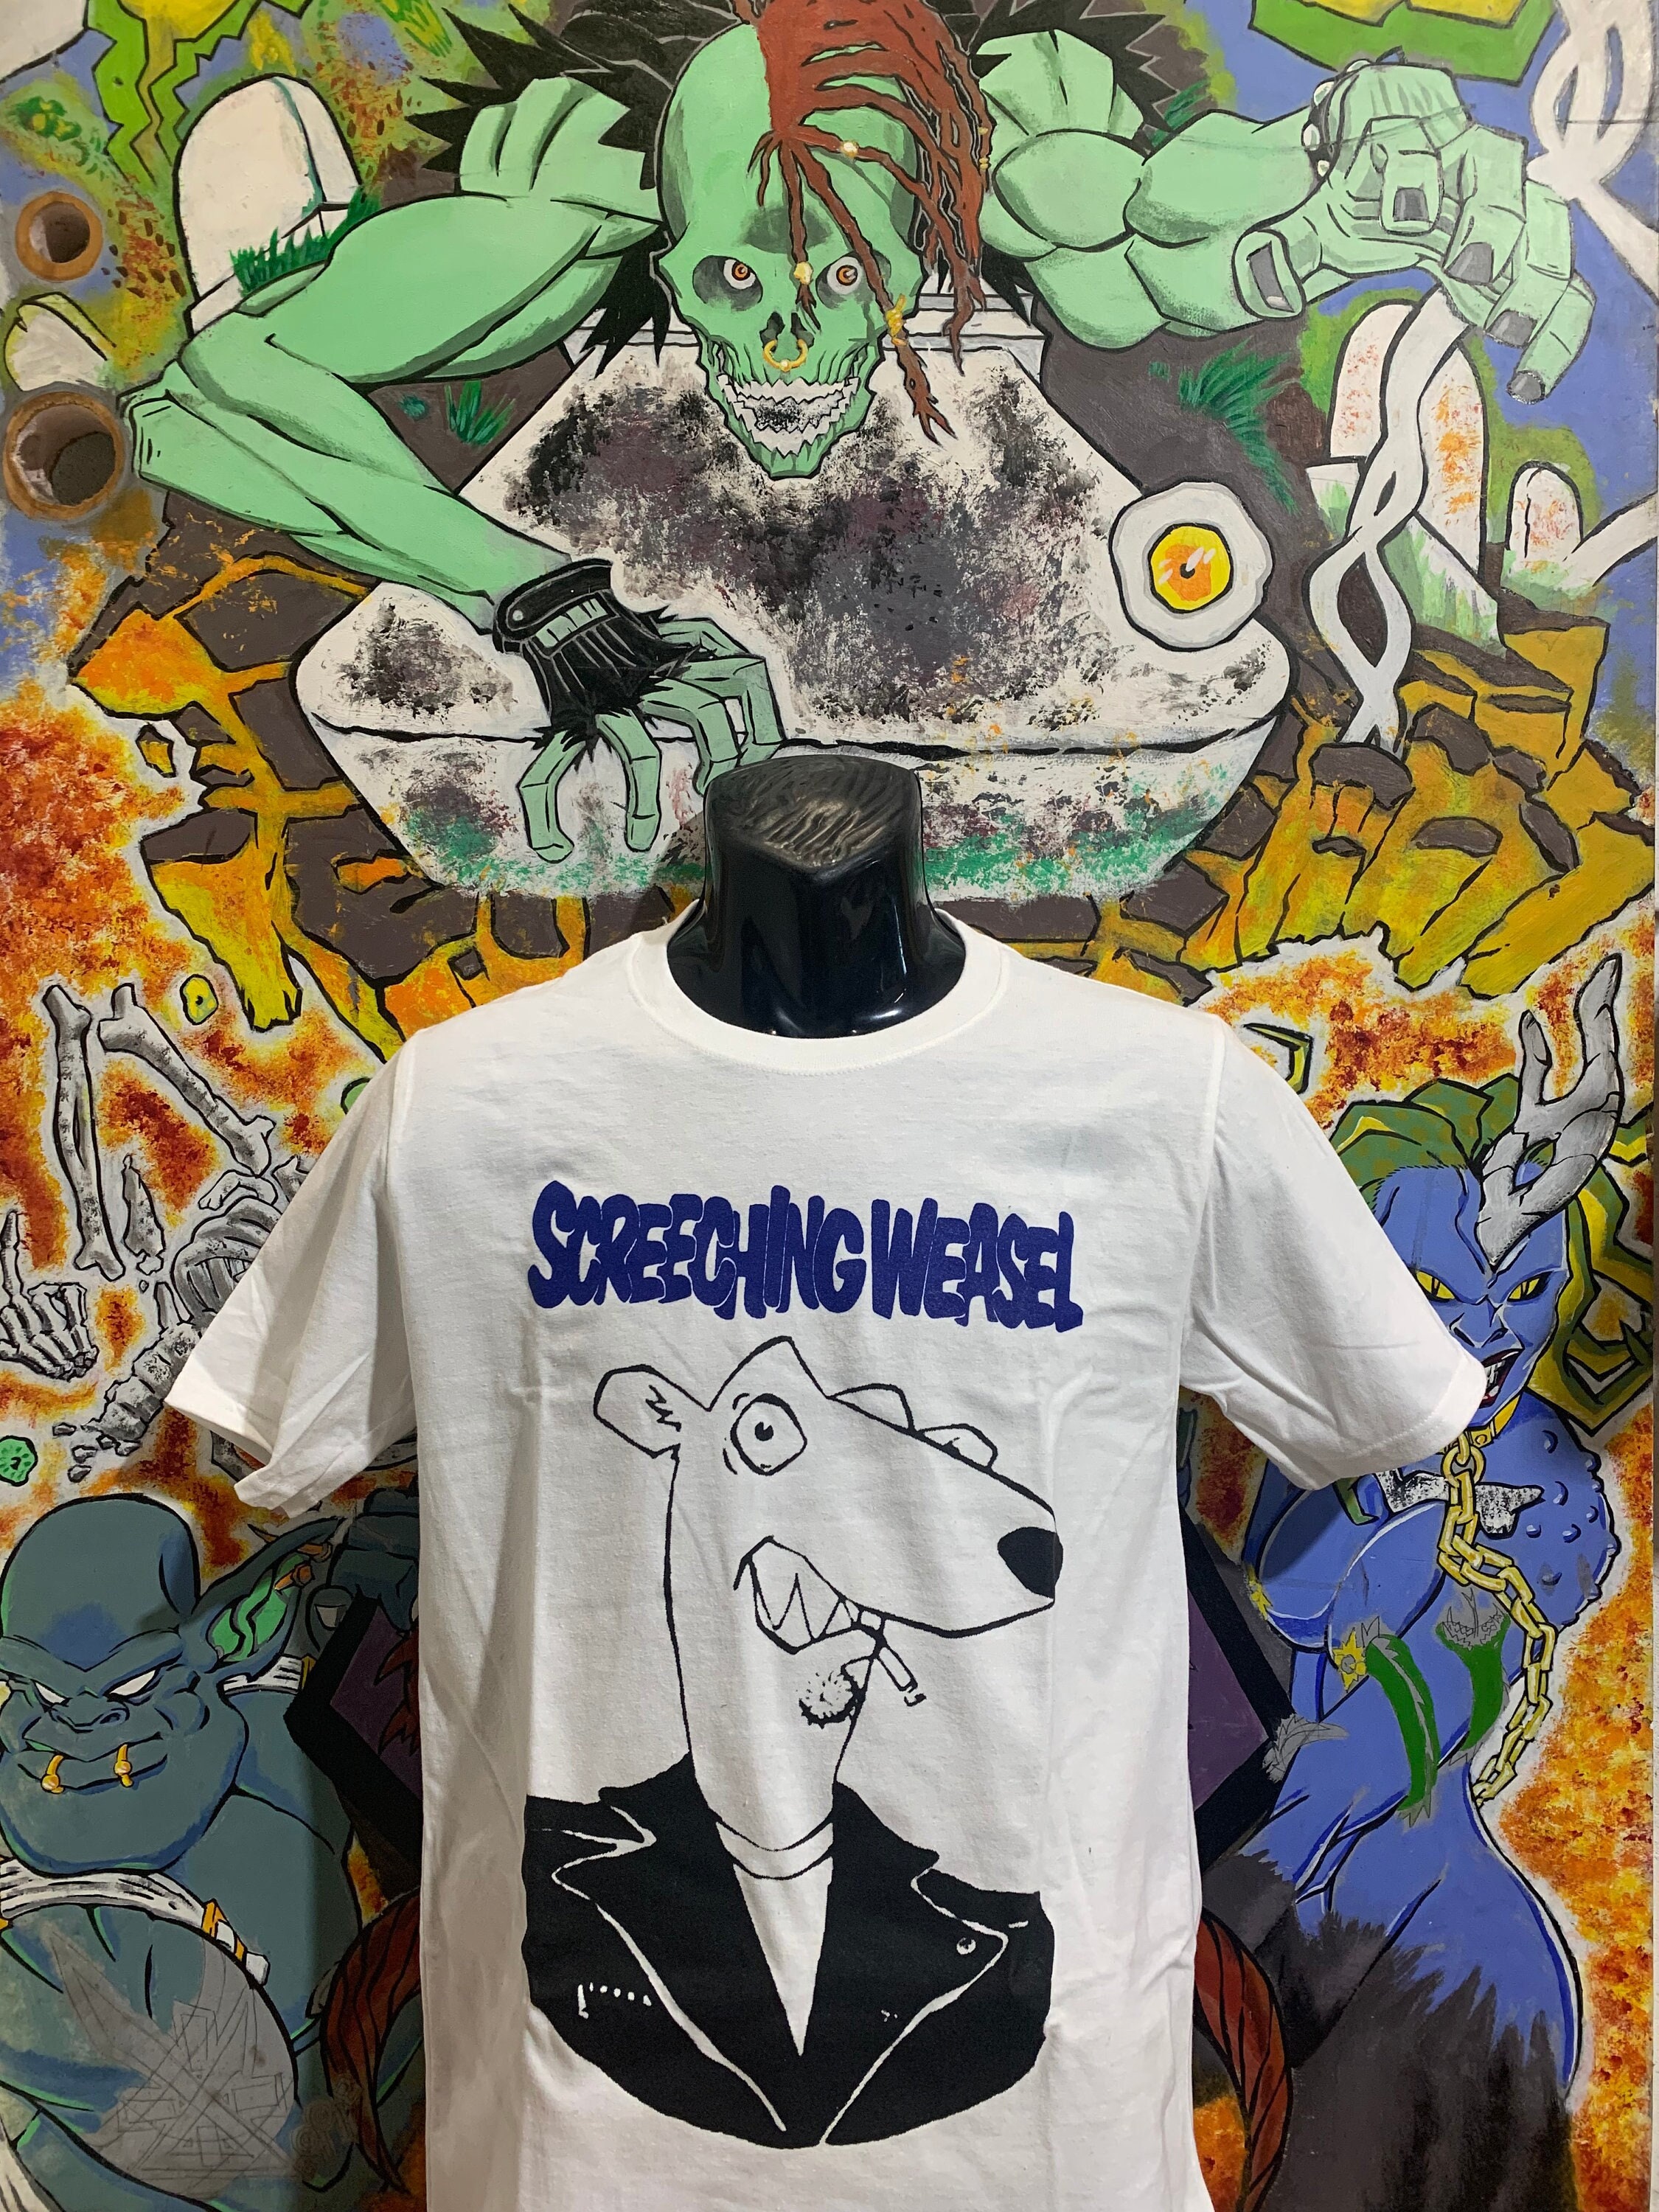 Discover Screeching Weasel "Weasel Head" Shirt NOFX Rancid OPIV Punk Ramones Riverdales